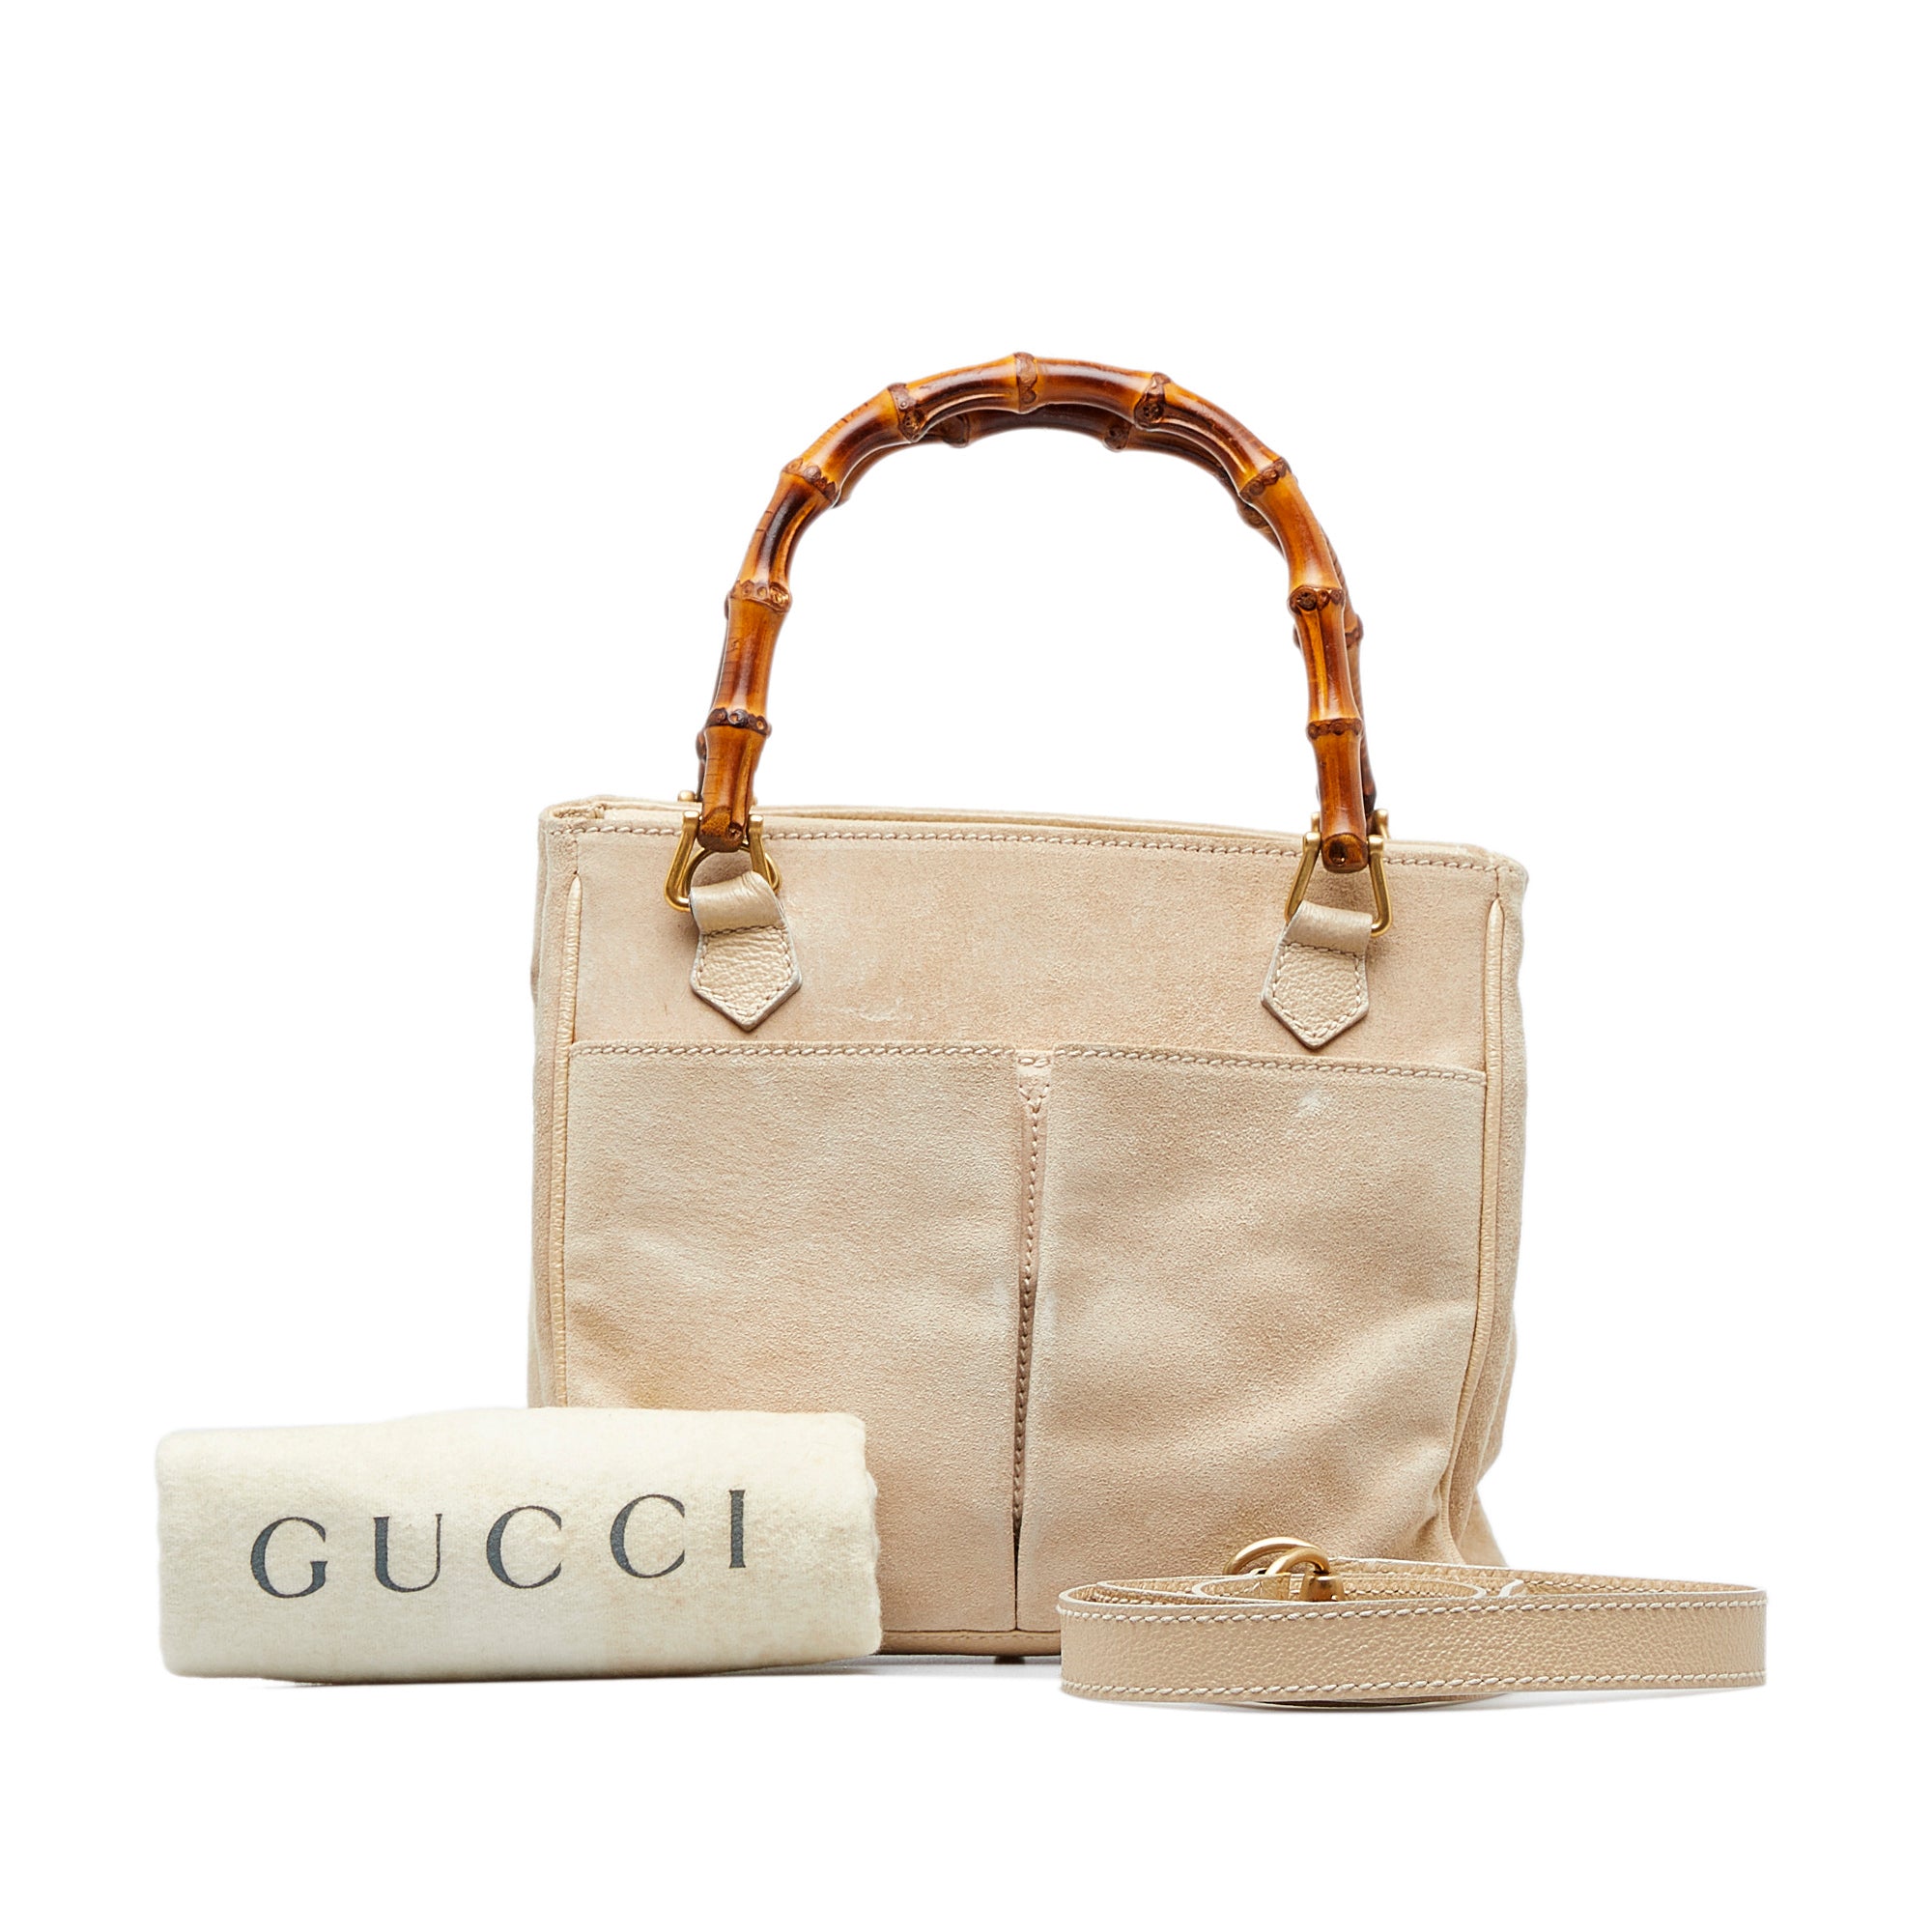 Gucci, Bags, Gucci Authentic Bamboo Black Zipper Purse Makeup Bag Travel